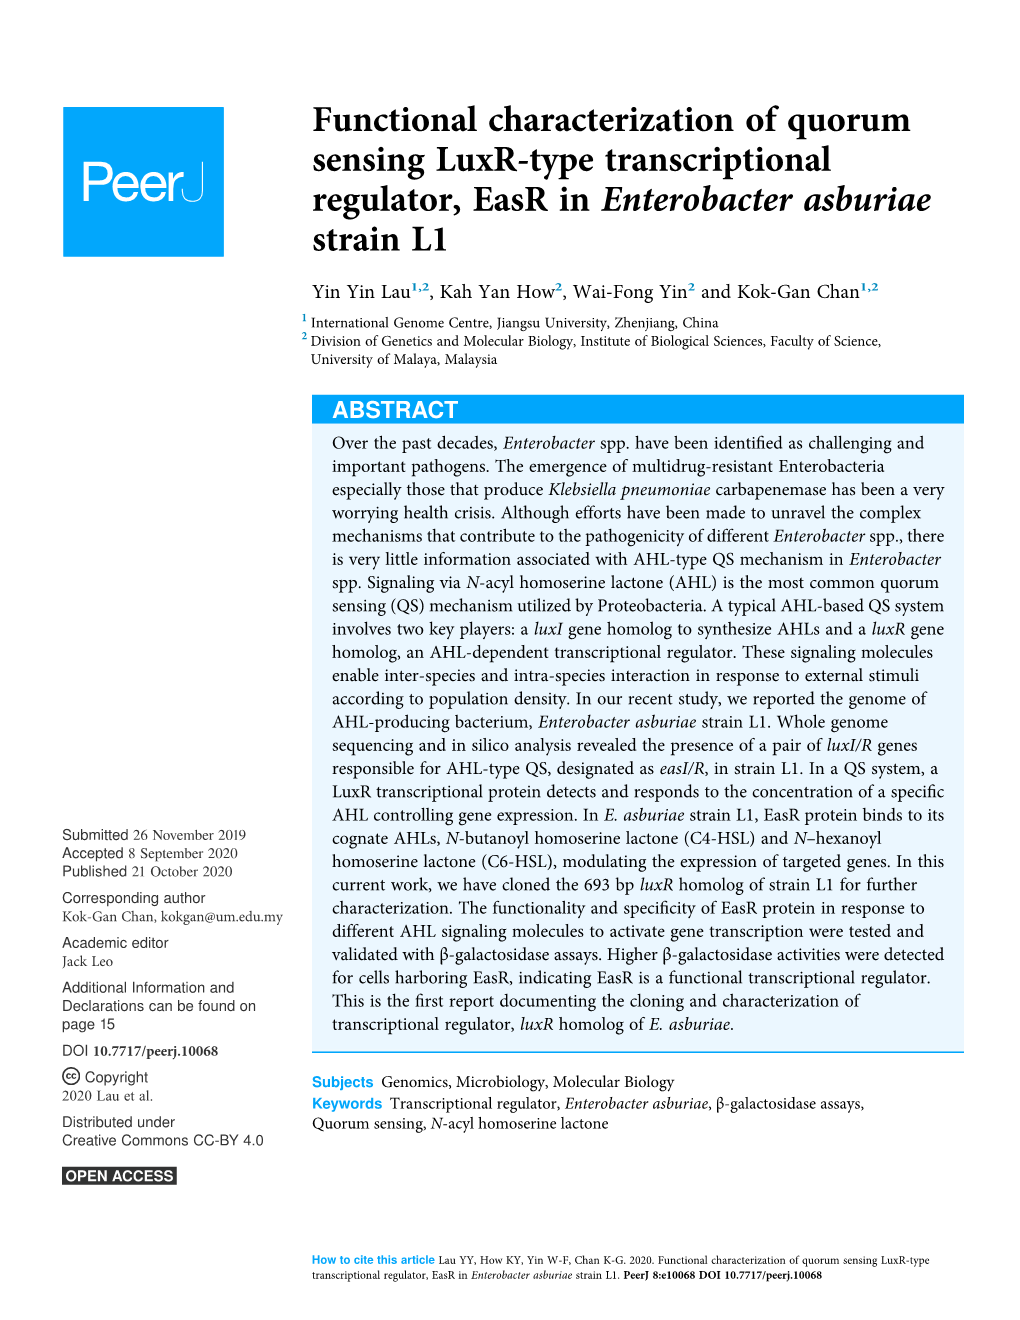 Functional Characterization of Quorum Sensing Luxr-Type Transcriptional Regulator, Easr in Enterobacter Asburiae Strain L1